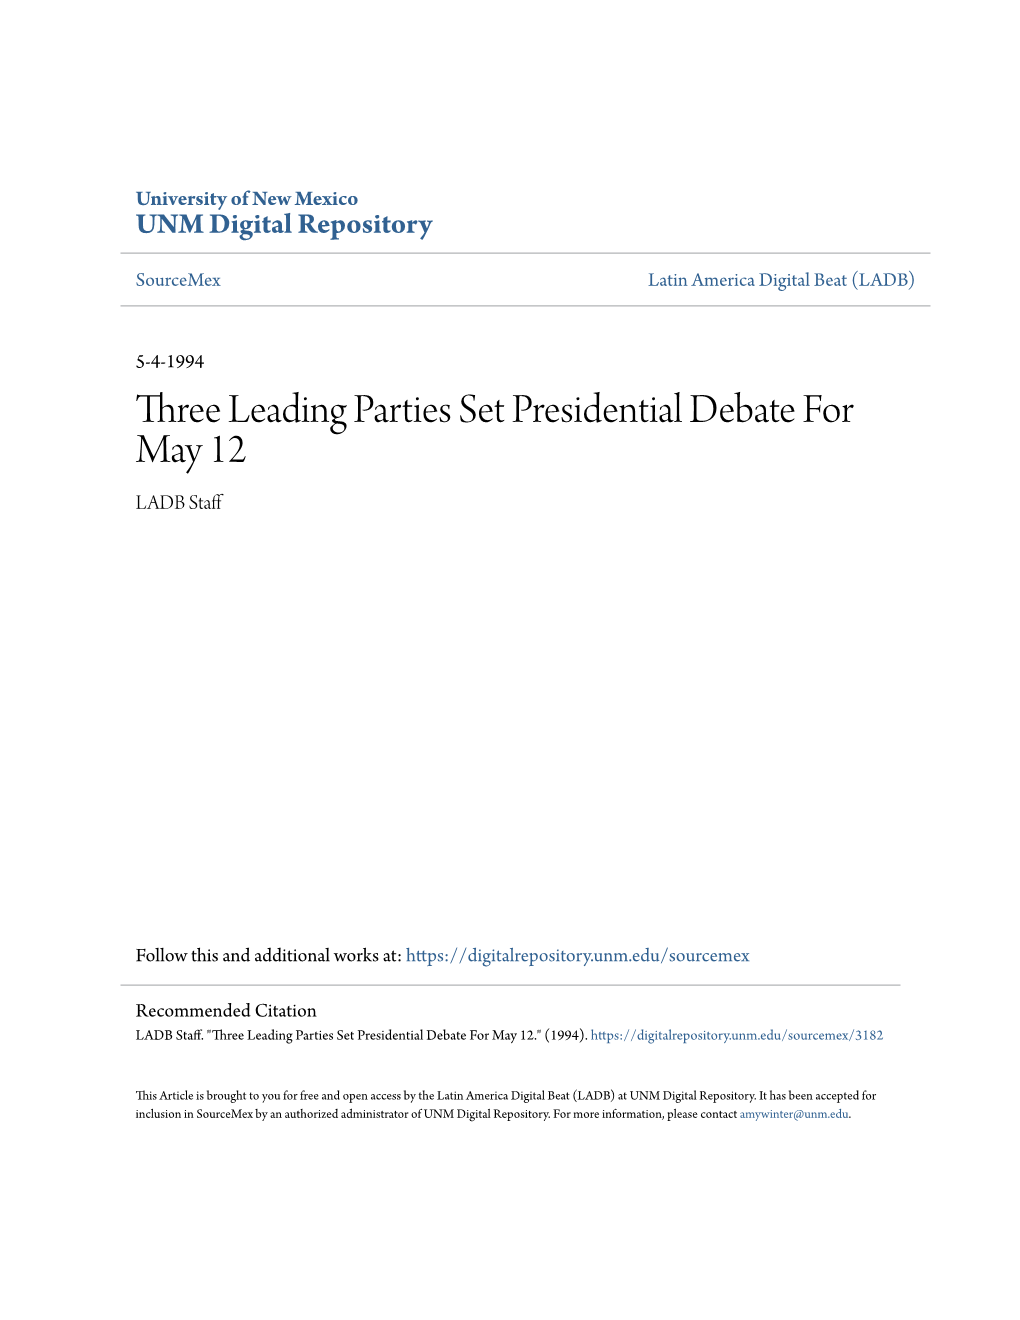 Three Leading Parties Set Presidential Debate for May 12 LADB Staff